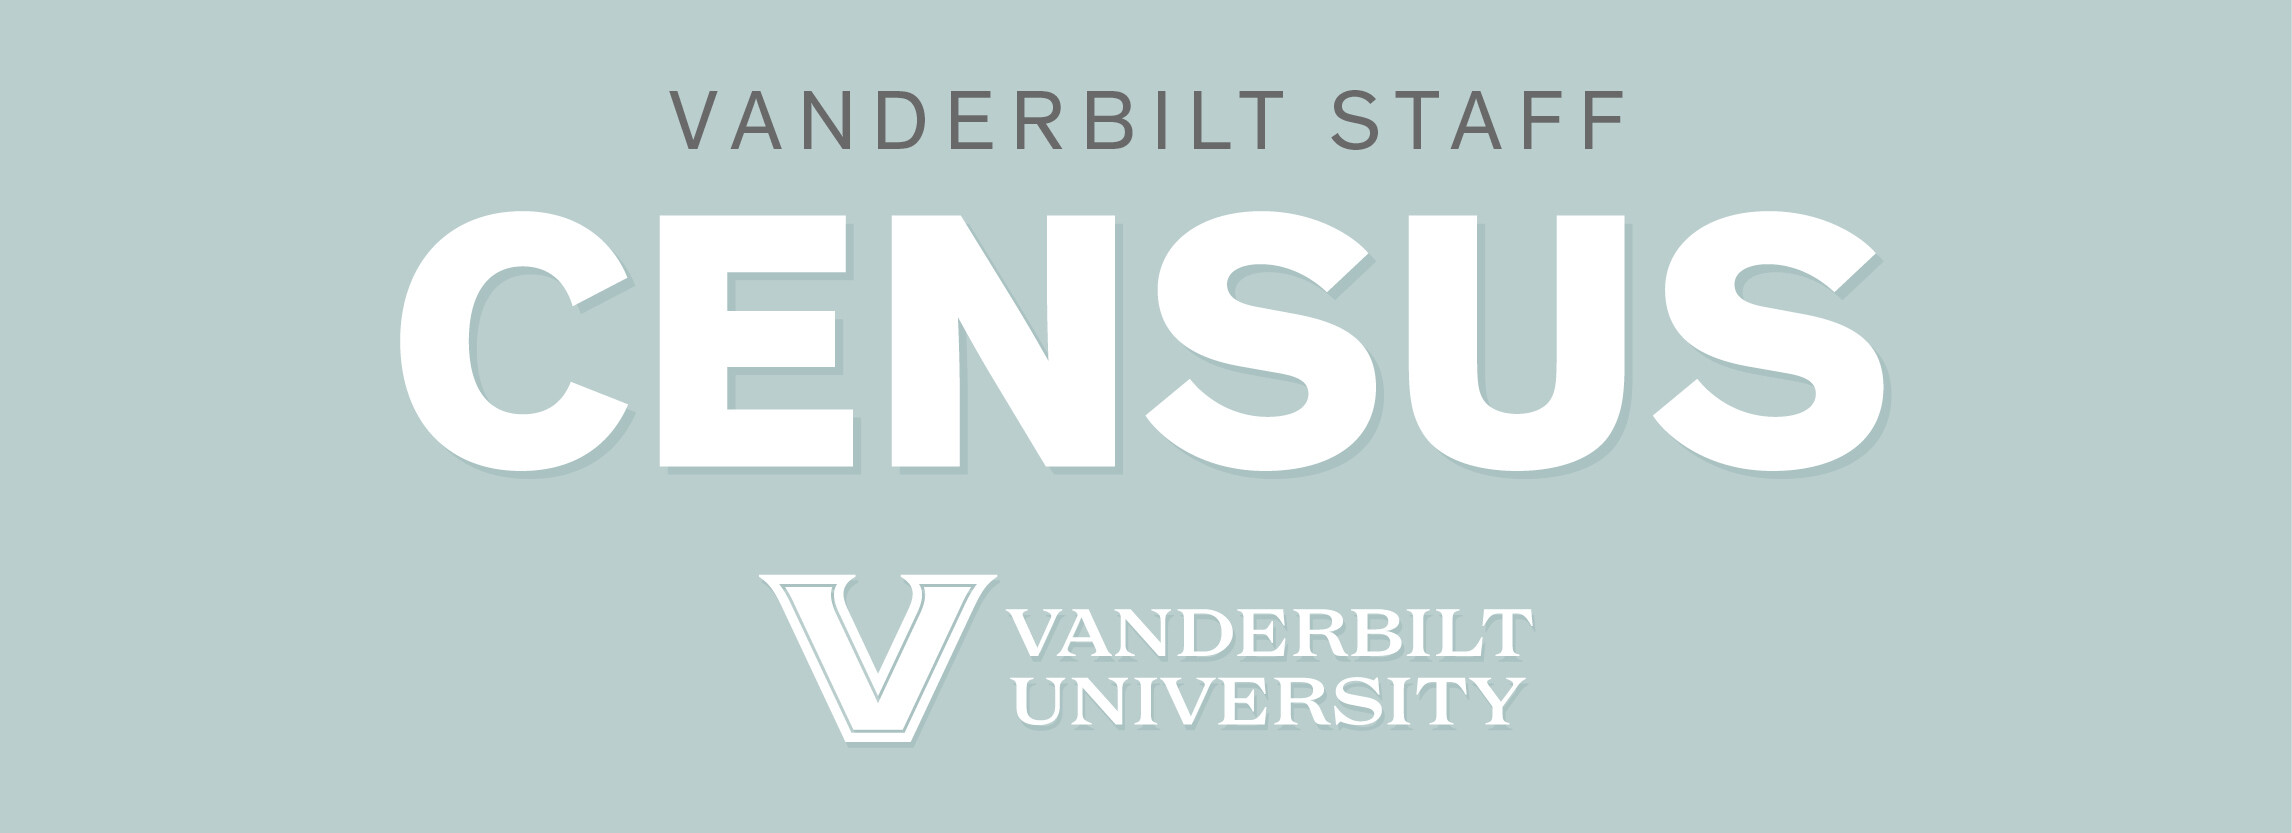 Vanderbilt Staff Census